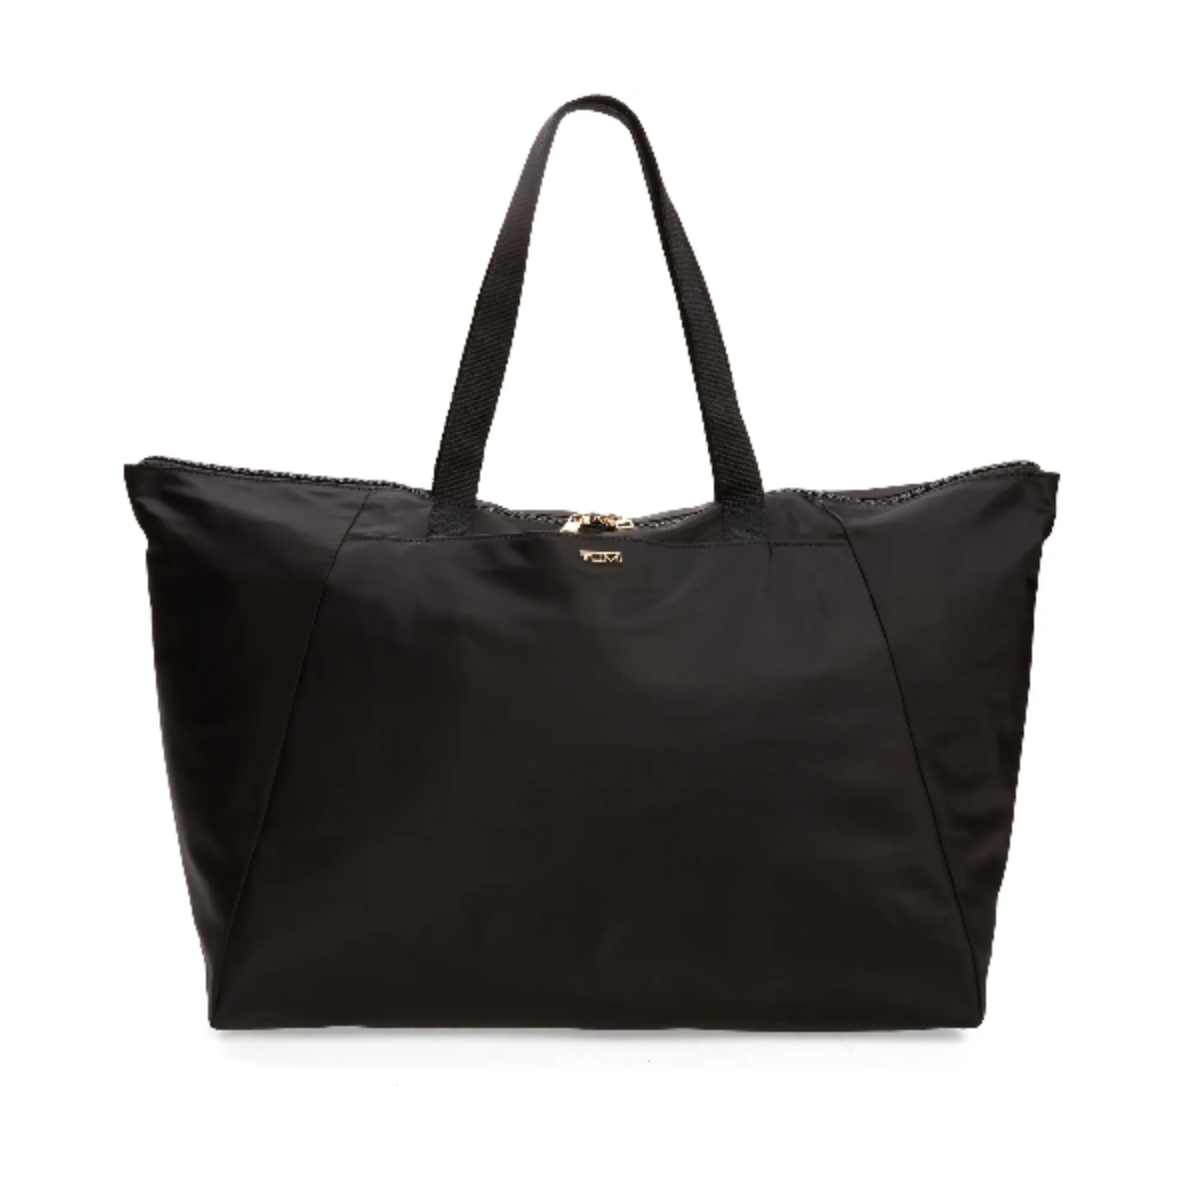 Buy Volcanic Rock Shoulder Bag Corss-Body Purse Waterproof Nylon Handbags  with Zipper For Women(8981_Dark Blue) at Amazon.in